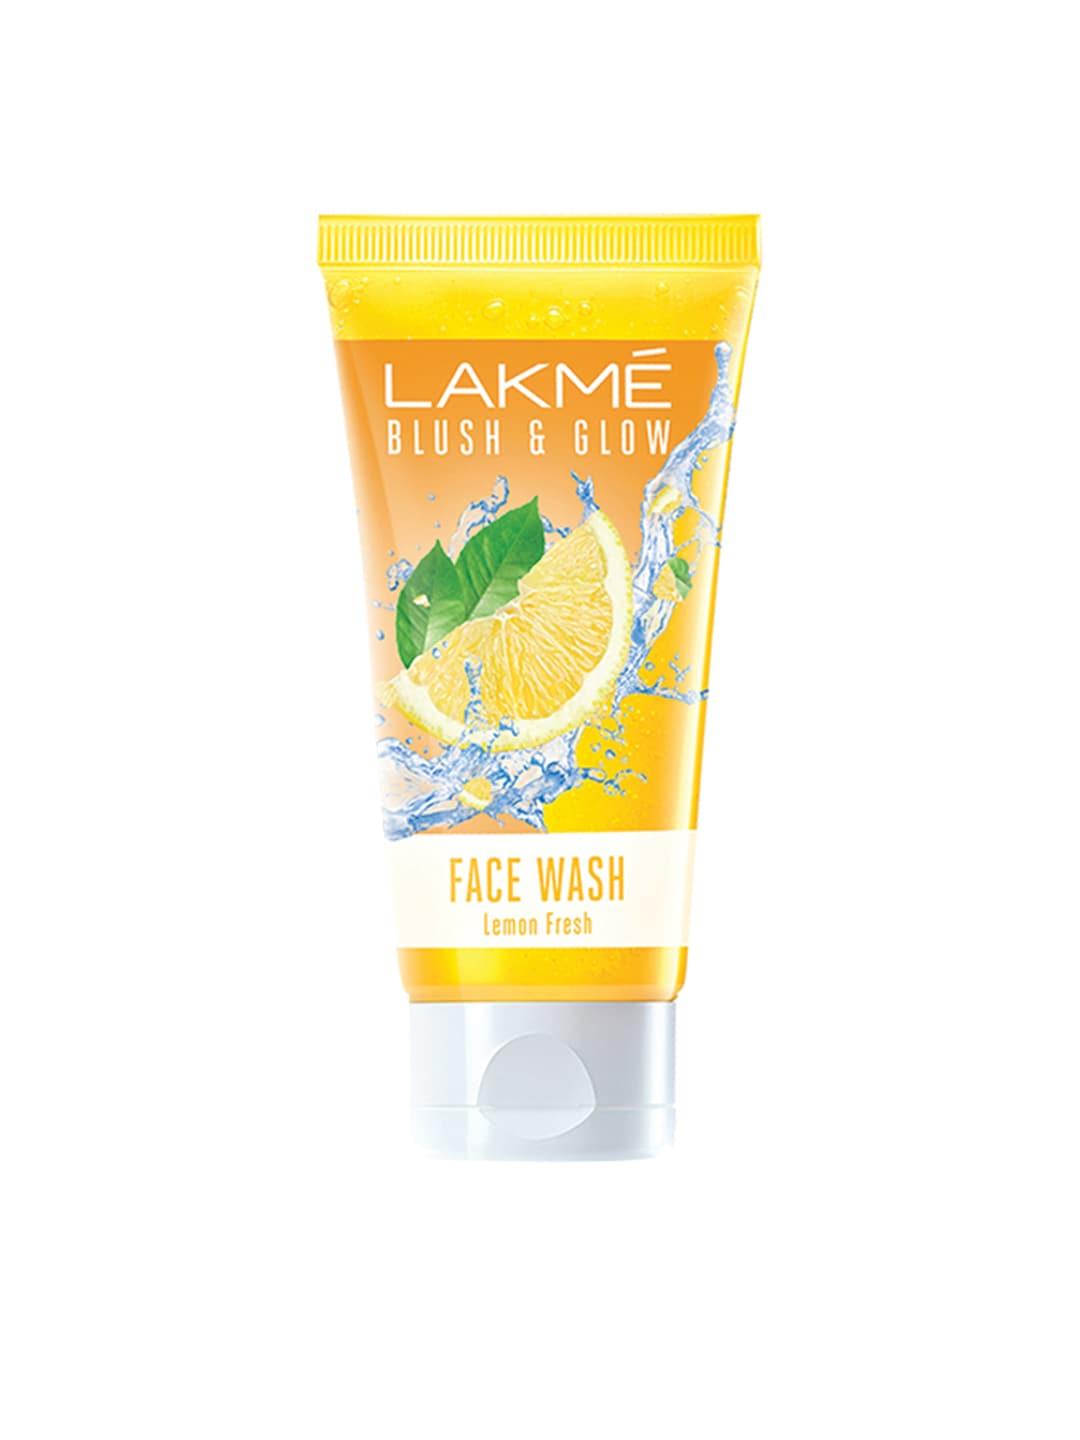 Lakme Blush & Glow Lemon Gel Face Wash With 100% Real Lemon Extract 100 g